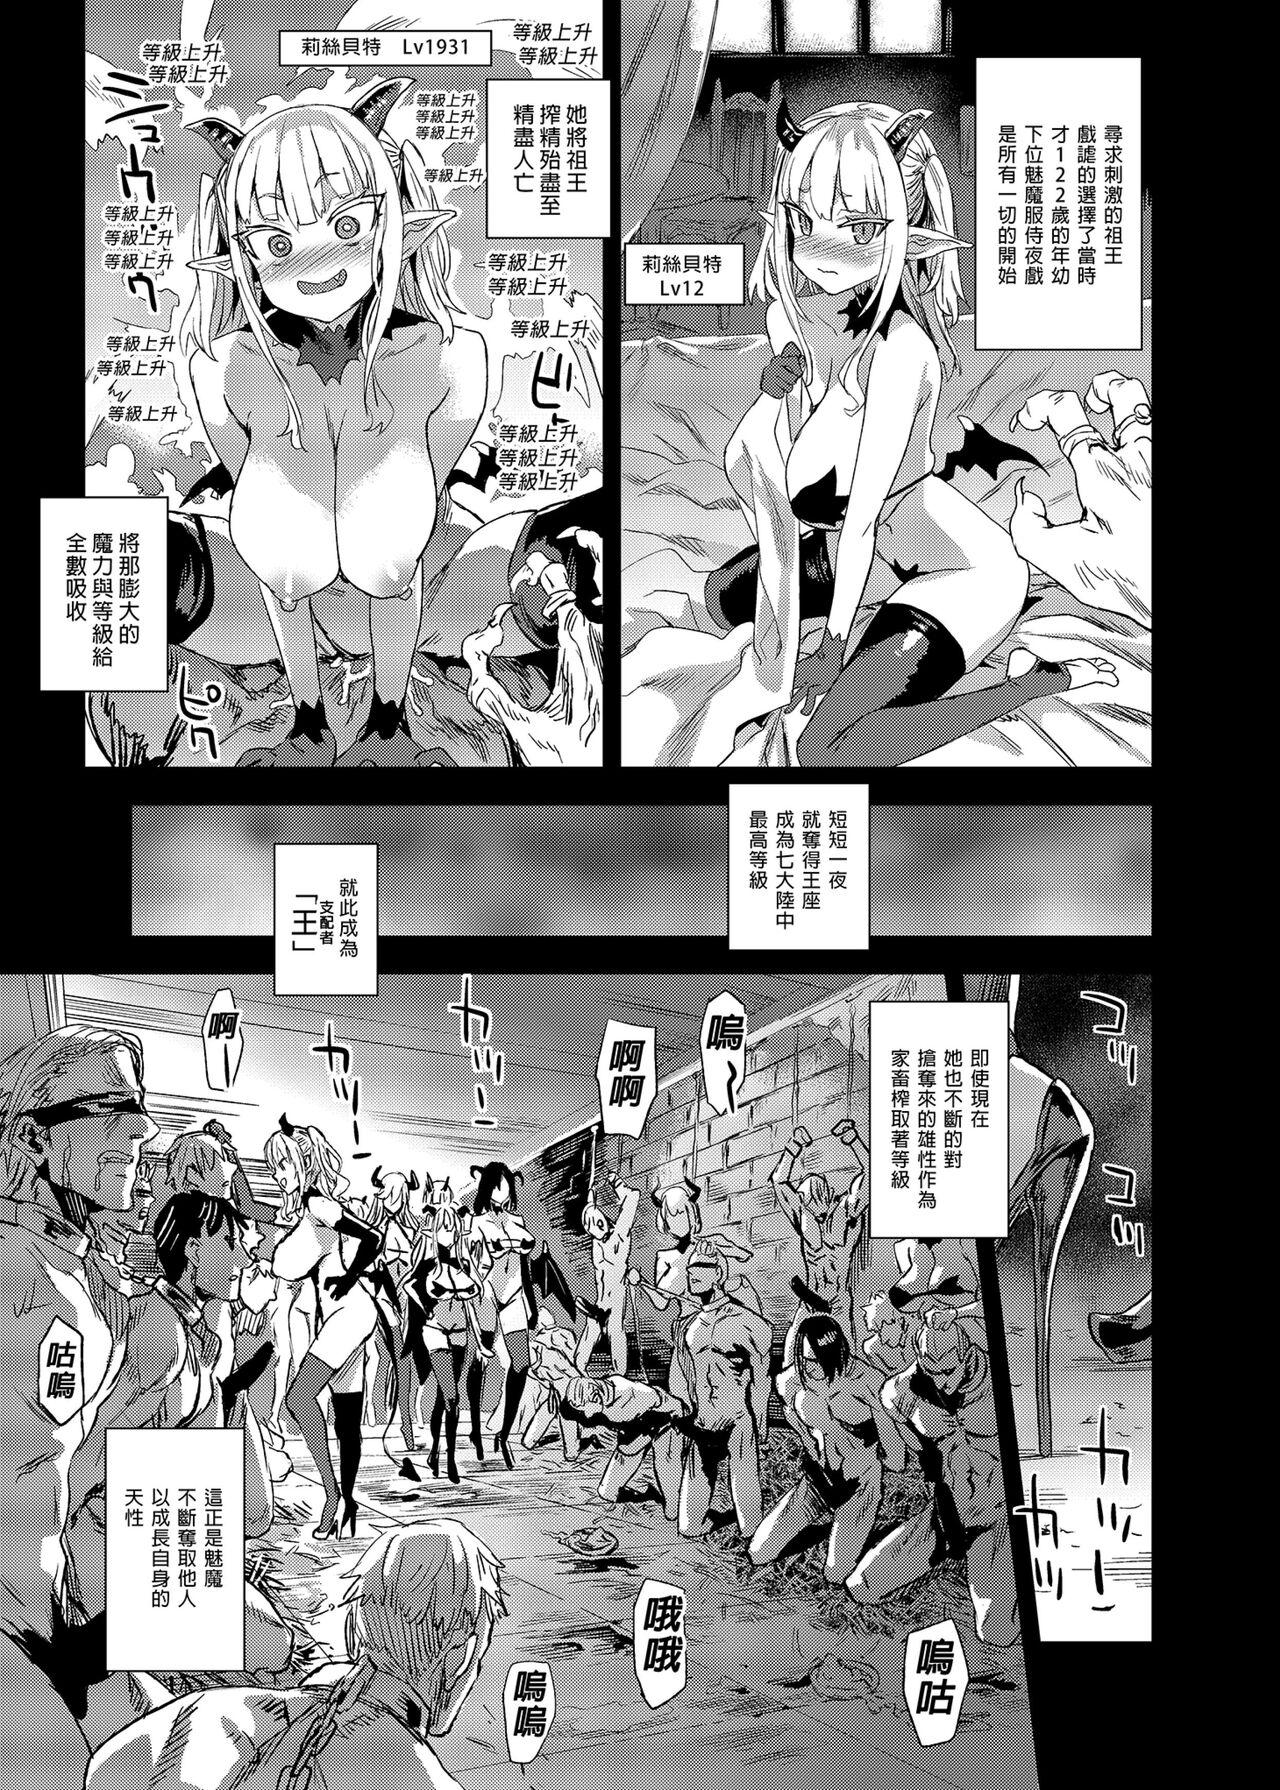 Flagra Succubus Joou vs Zako Goblin 魅魔女王vs雜魚哥布林 - Original Ebony - Page 5